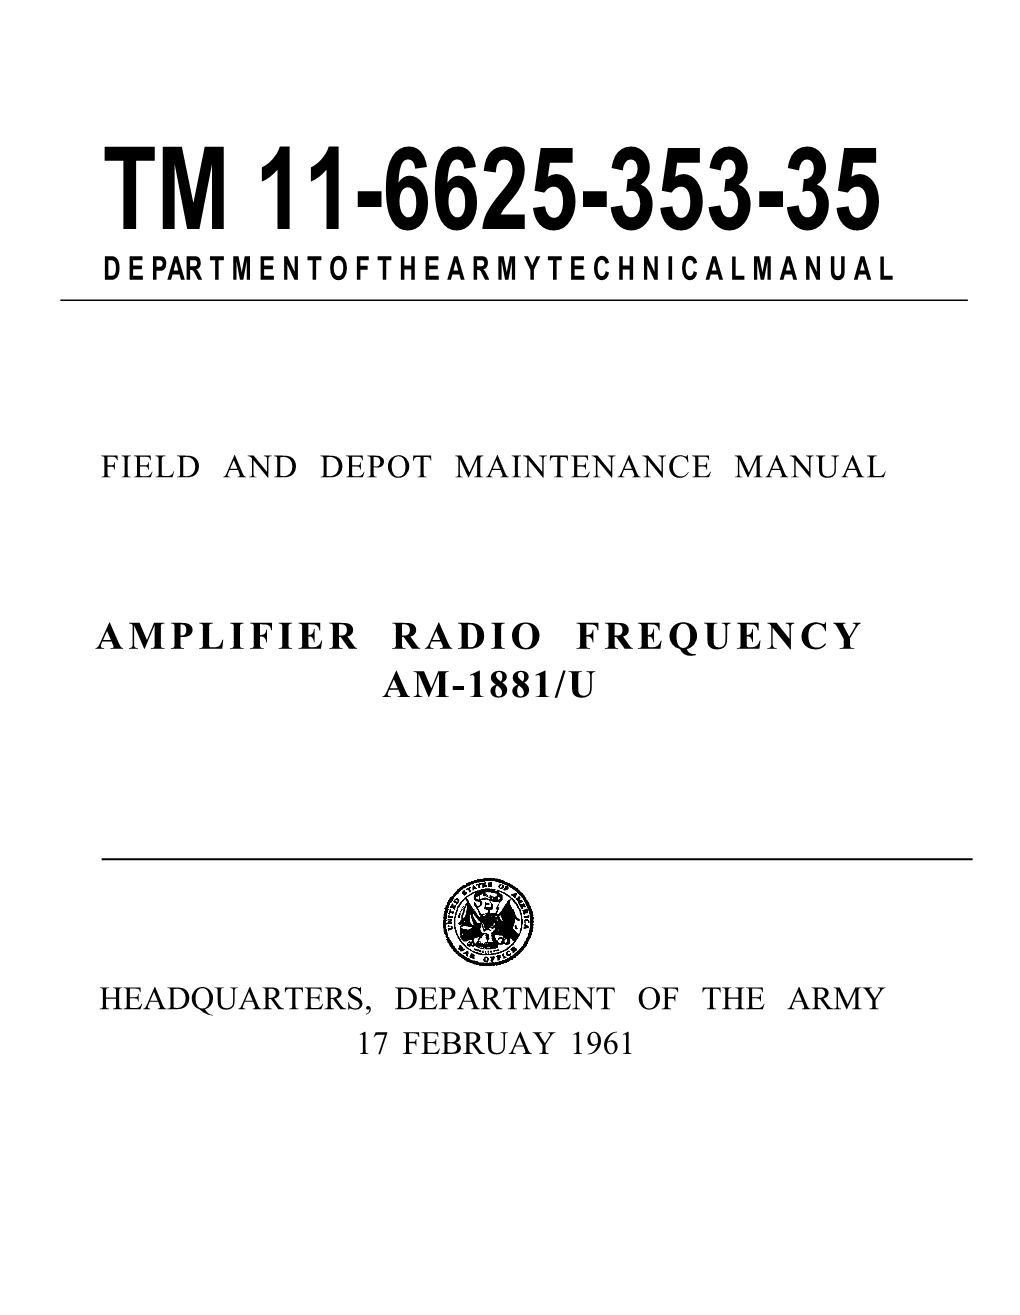 Amplifier Radio Frequency Am-1881/U